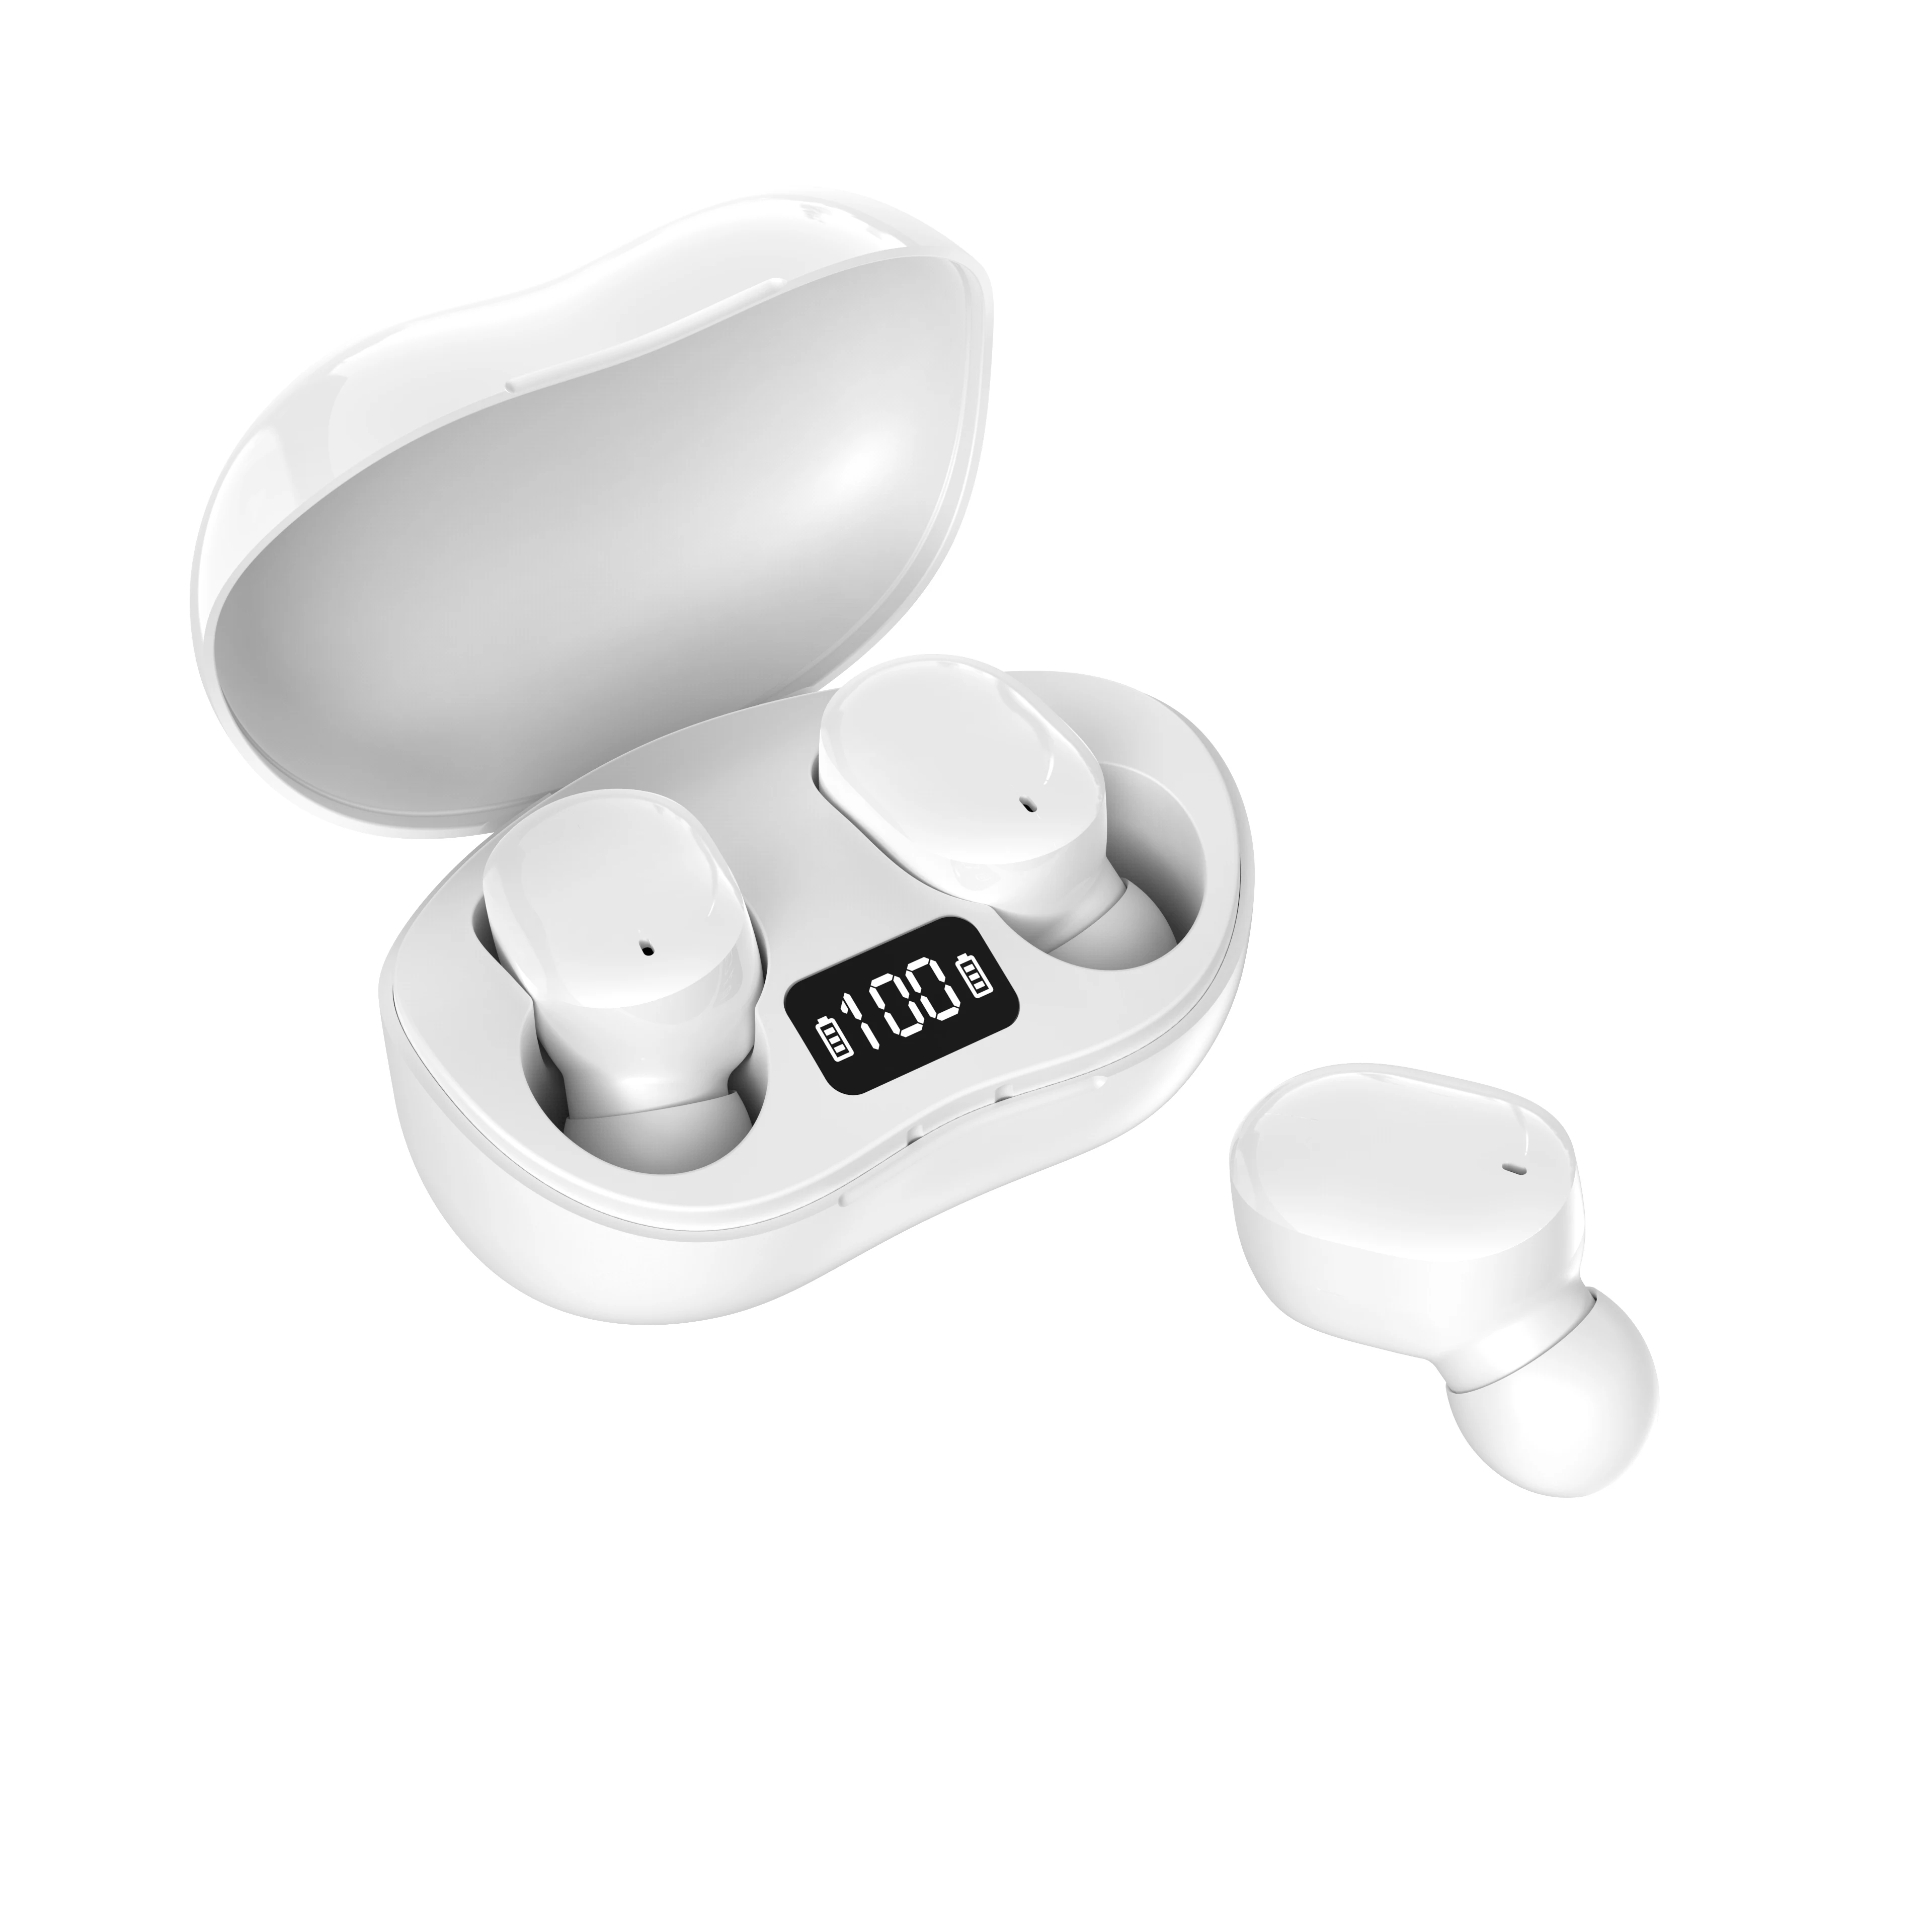 

Amazon Hot Selling TWS E8S A6S True Wireless Earbuds Handsfree Waterproof Earphone a6 A7S A8 E7S tws Headset for xiaomi -airdots, Black/white